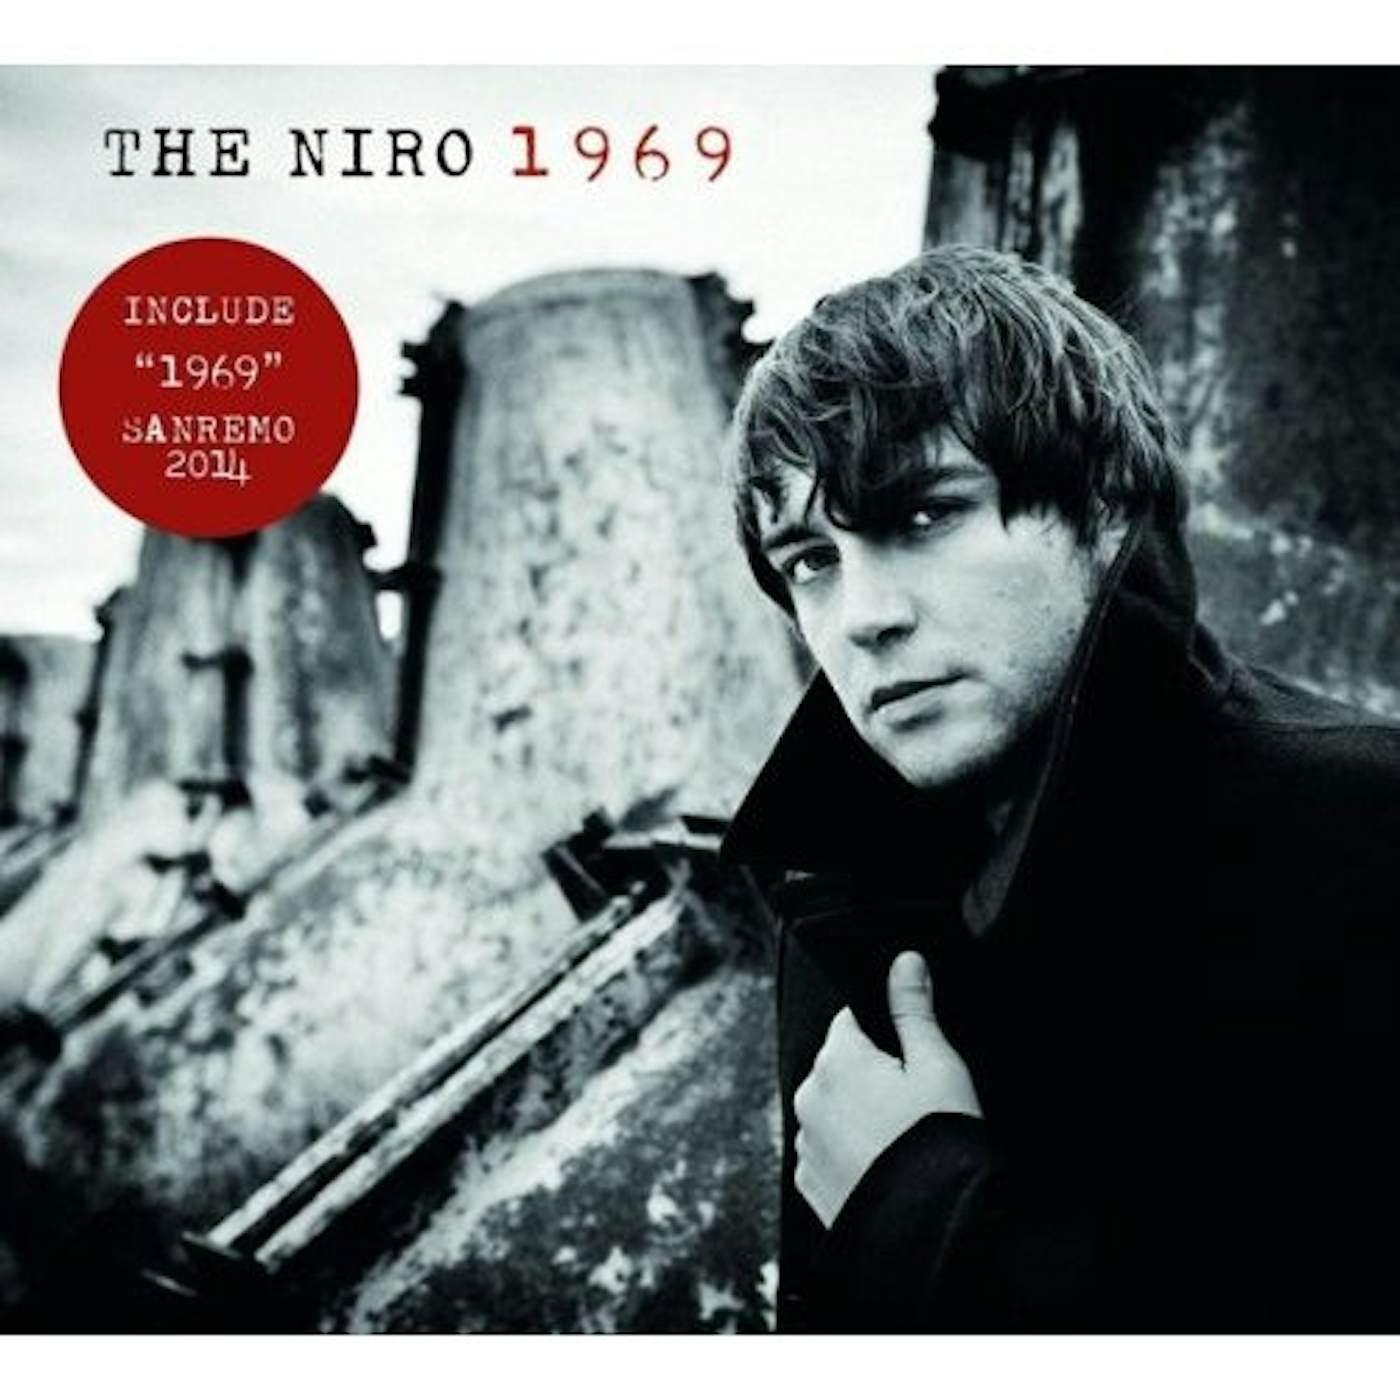 The Niro 1969 CD